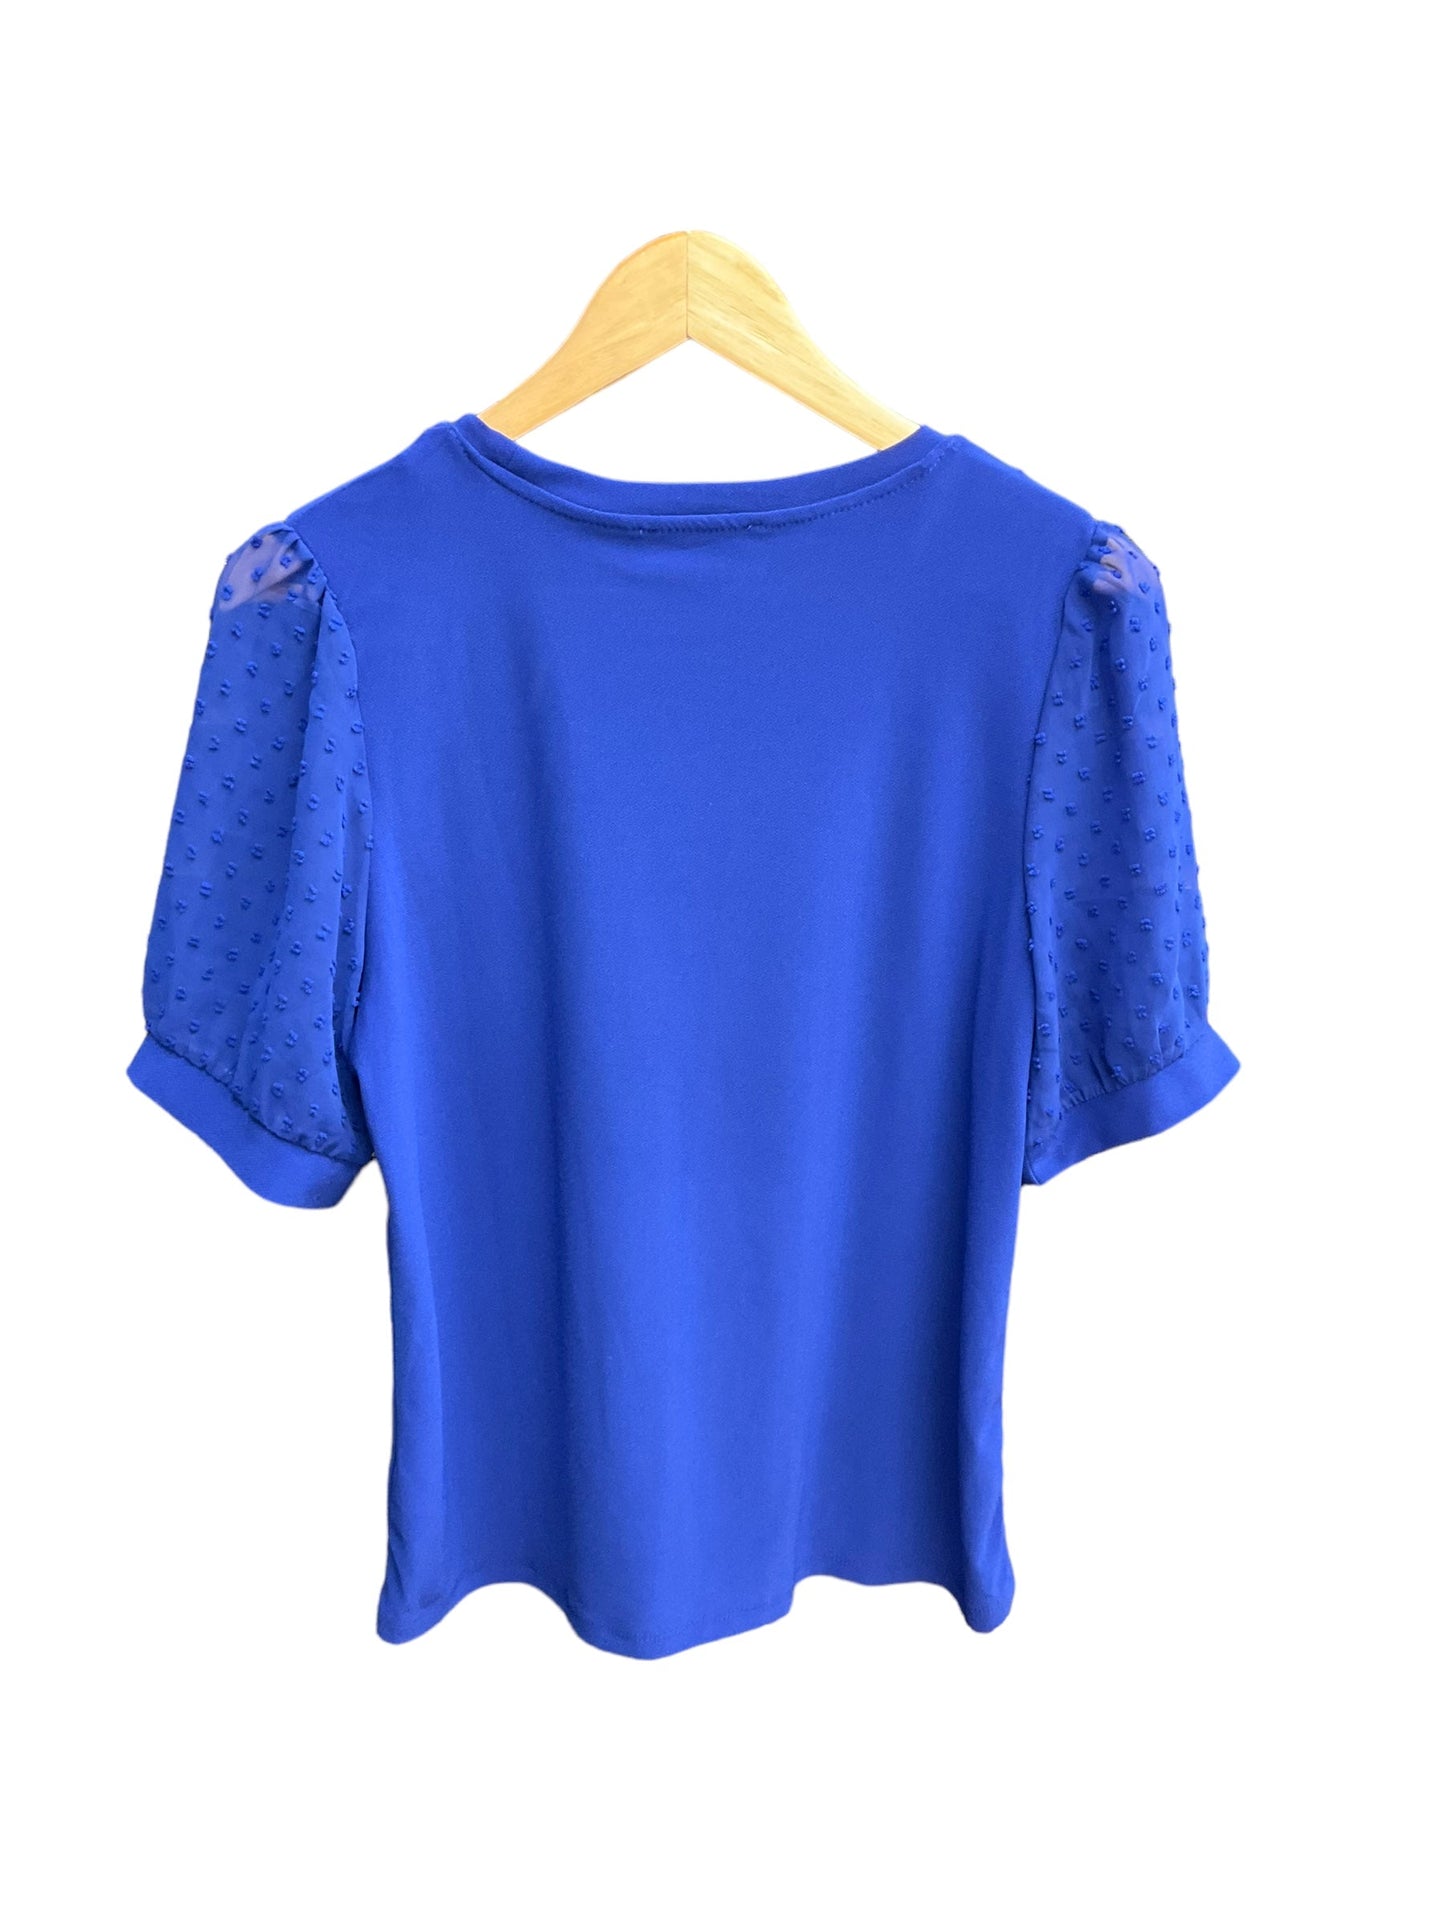 Blue Top Short Sleeve Cece, Size M